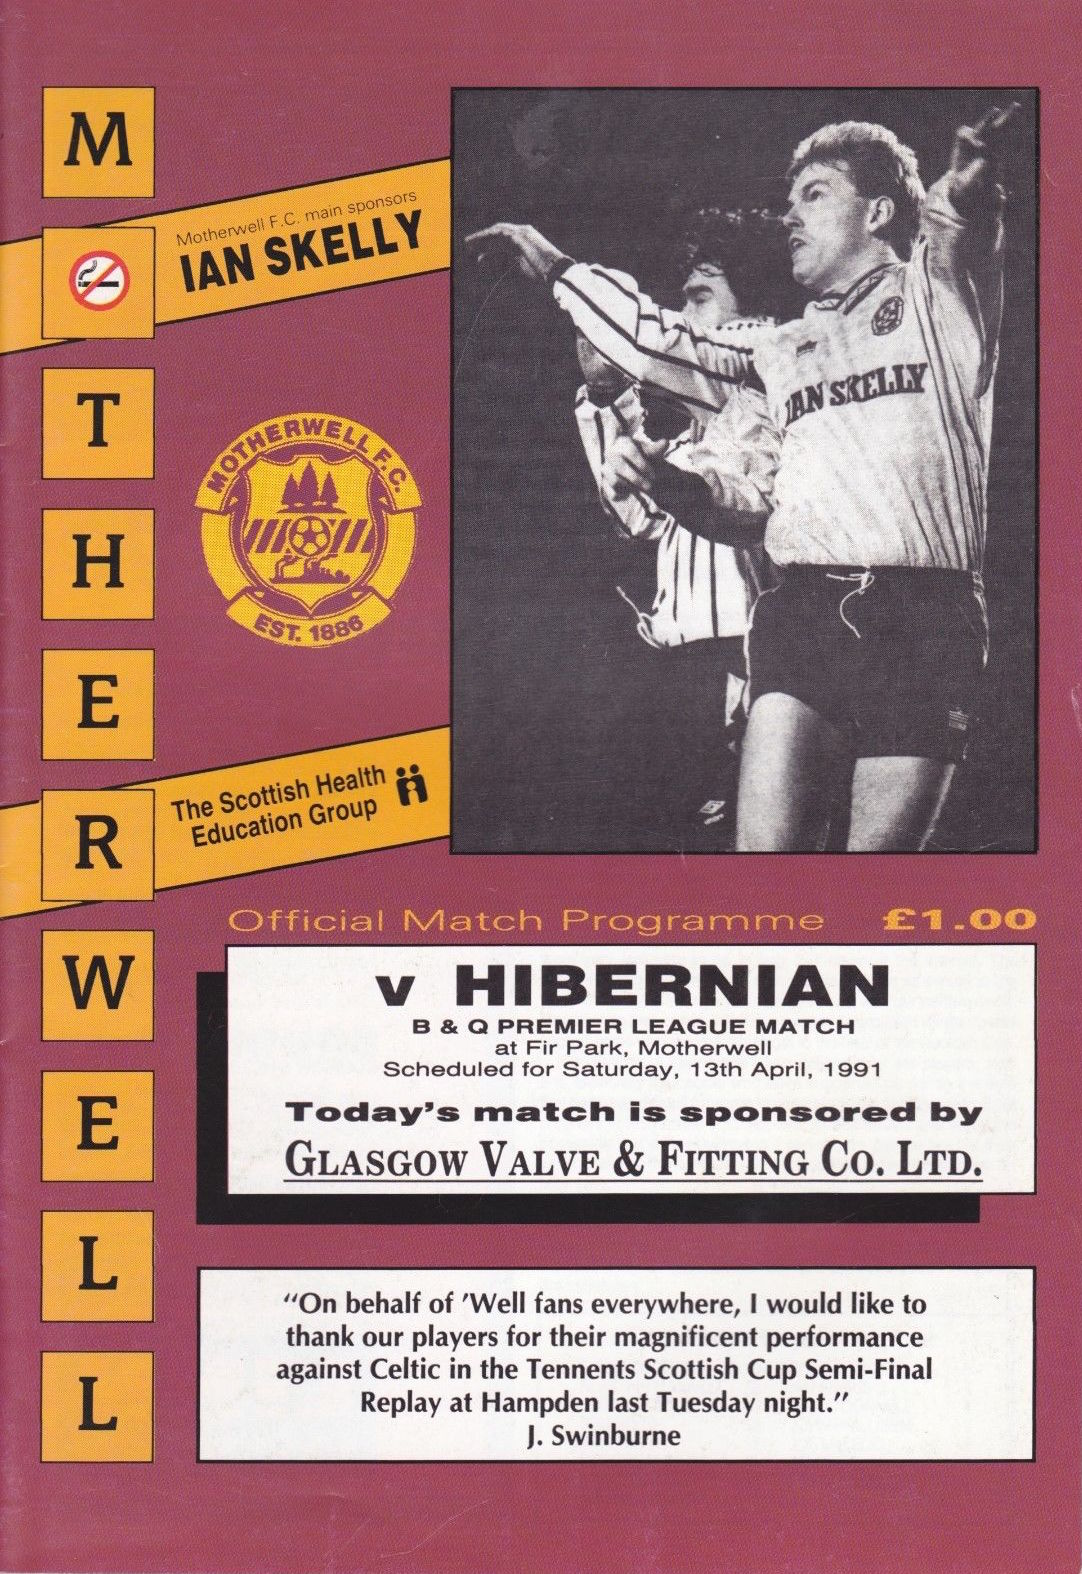 versus Hibernian Programme Cover